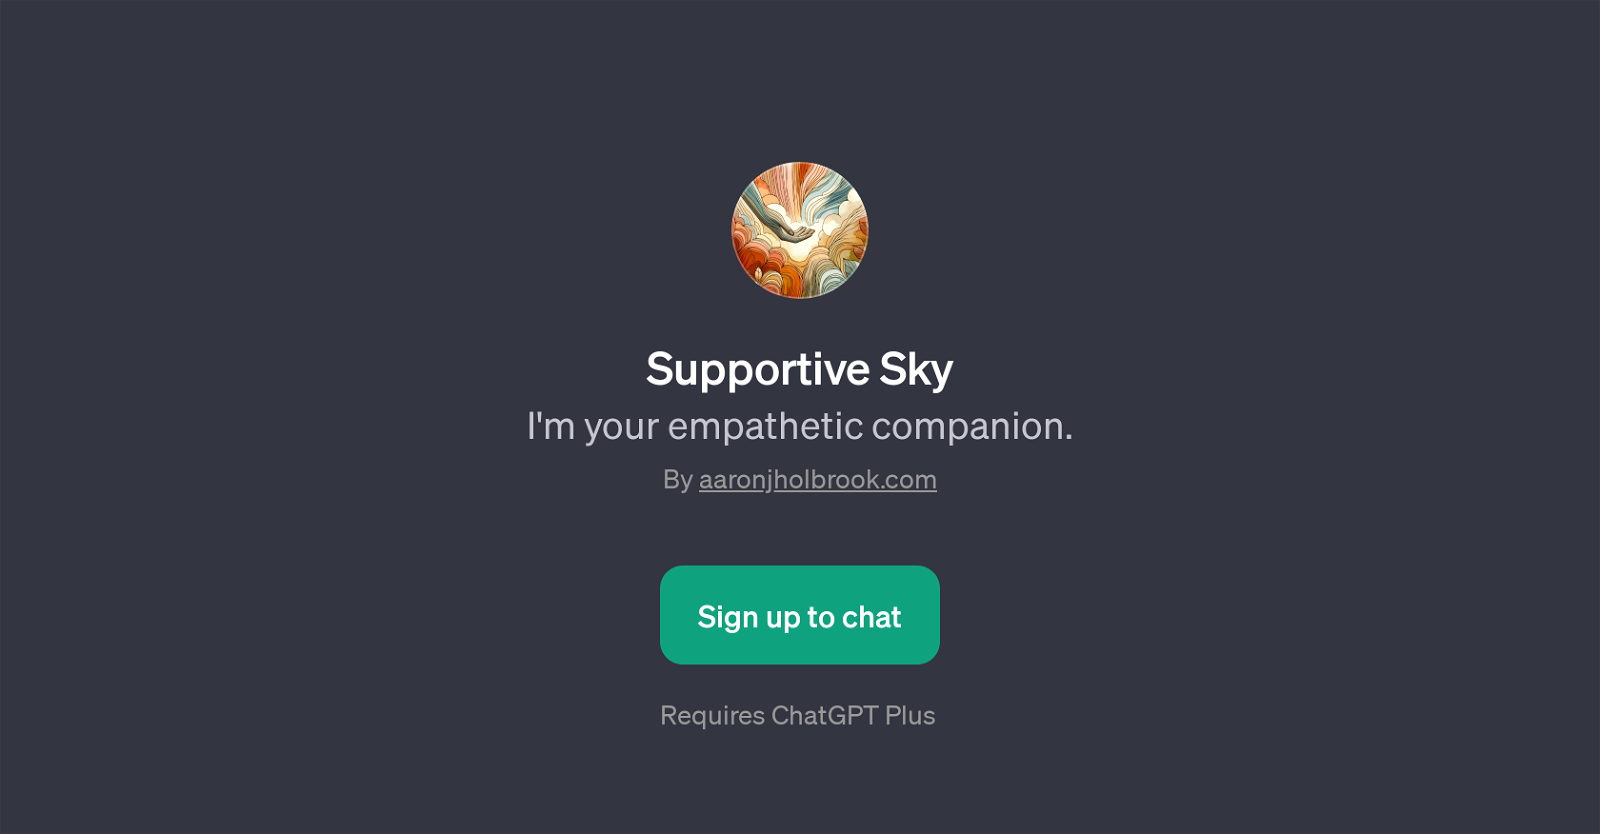 Supportive Sky website